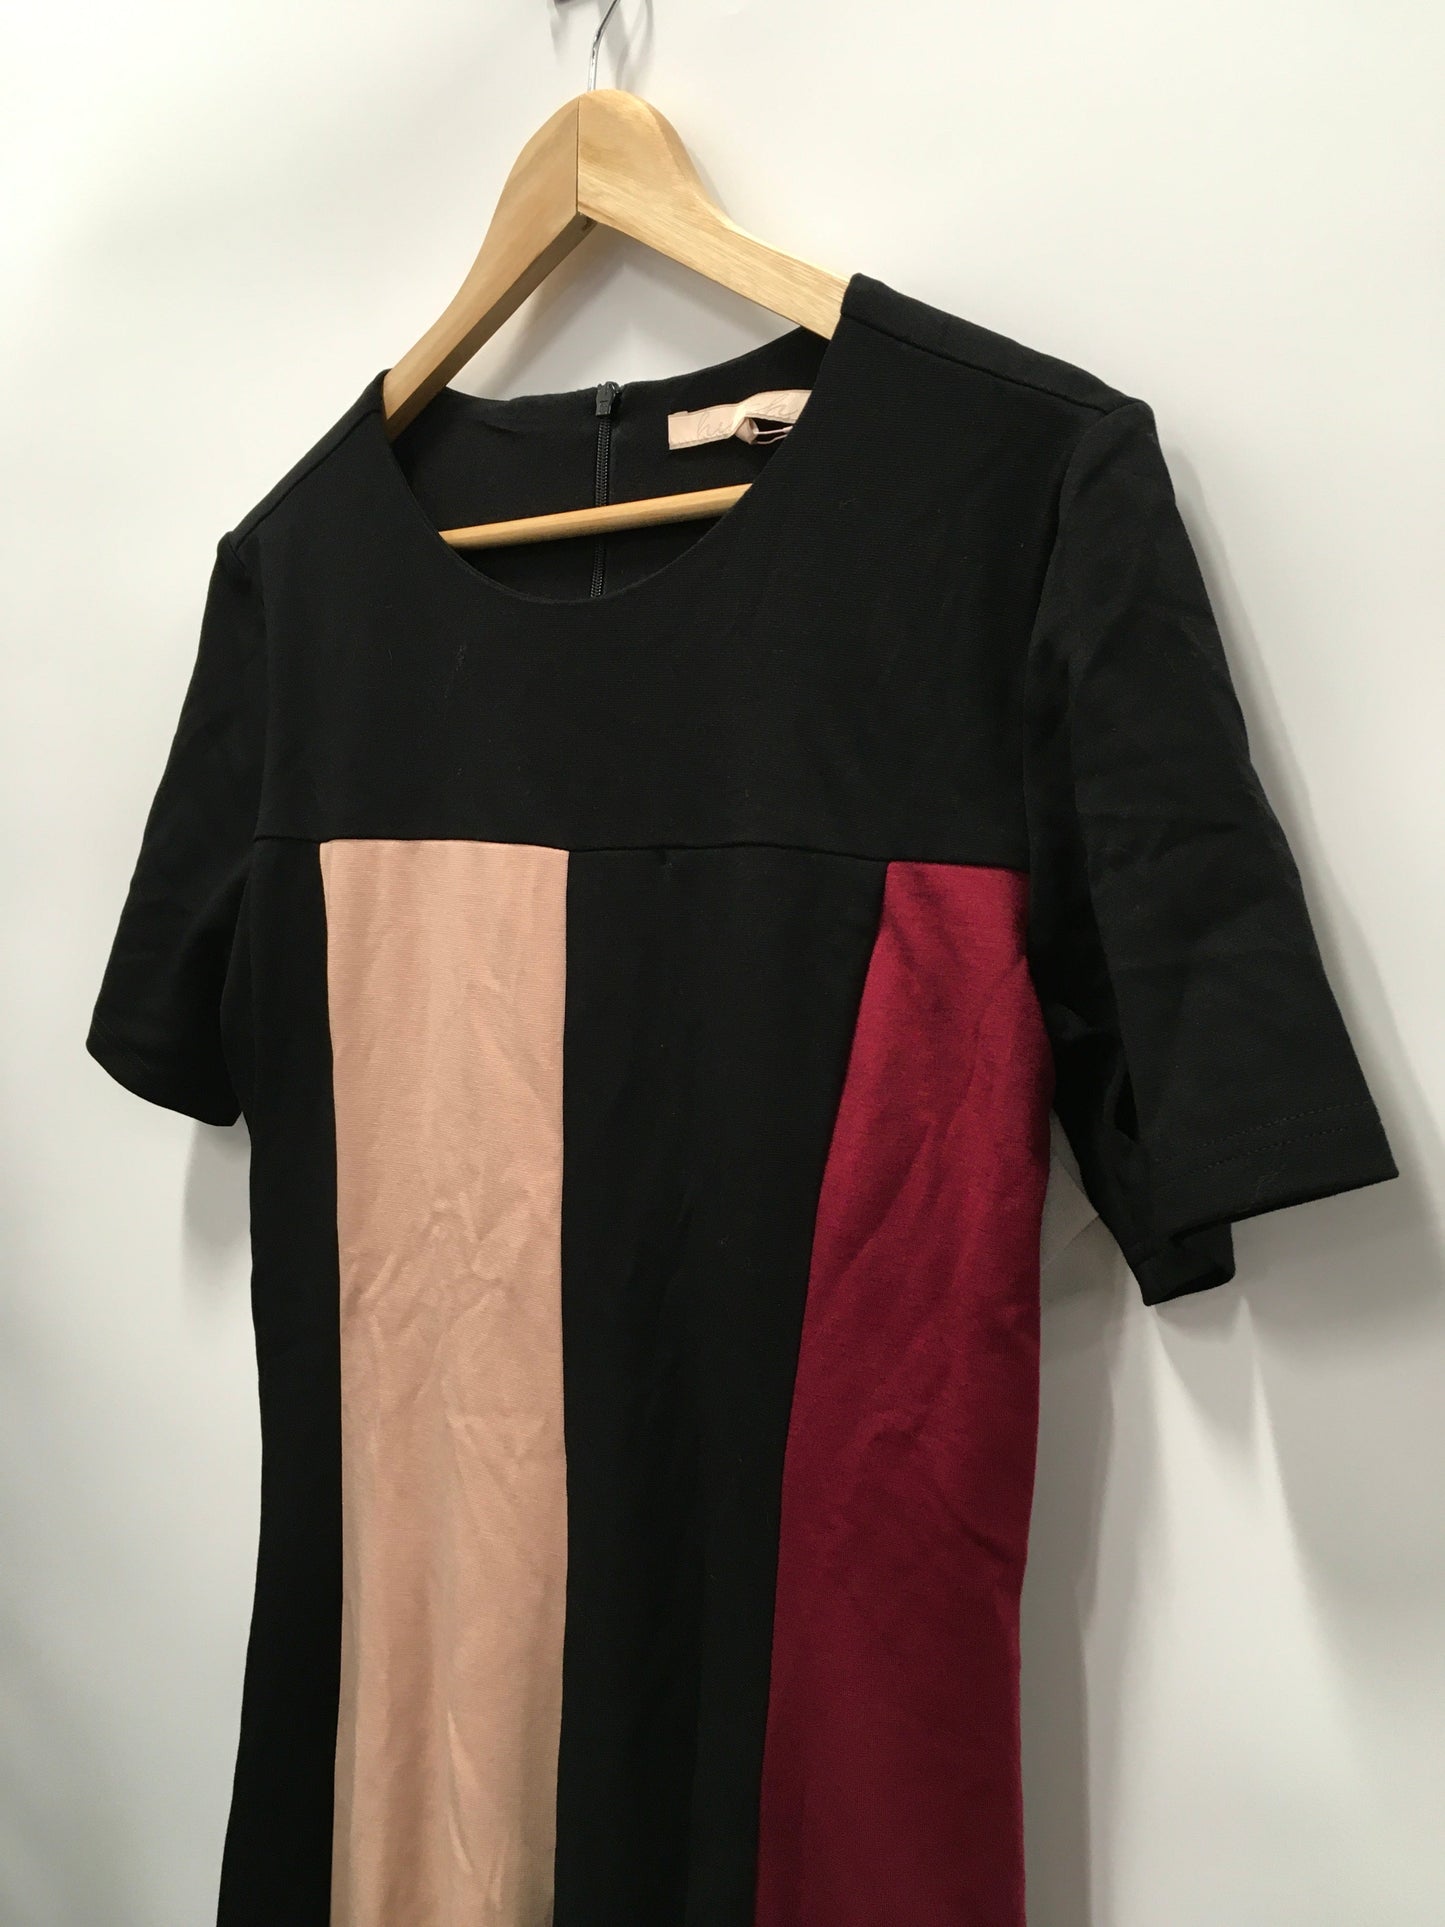 Black & Red Dress Casual Midi Hutch, Size L